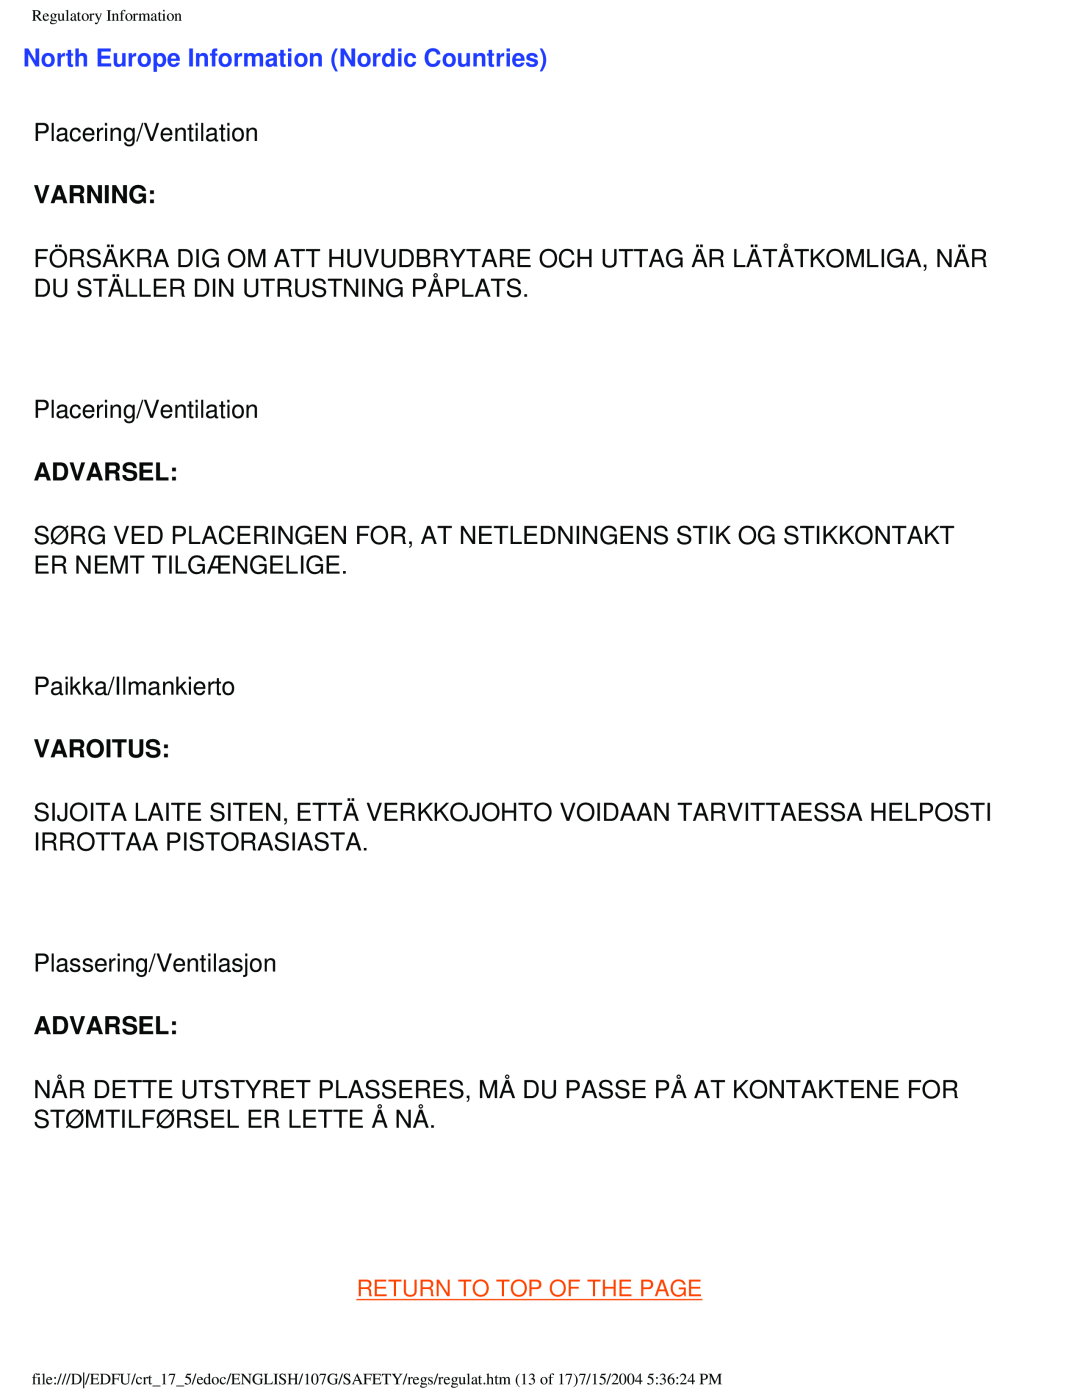 Philips 107G user manual North Europe Information Nordic Countries, Varning, Advarsel, Varoitus 